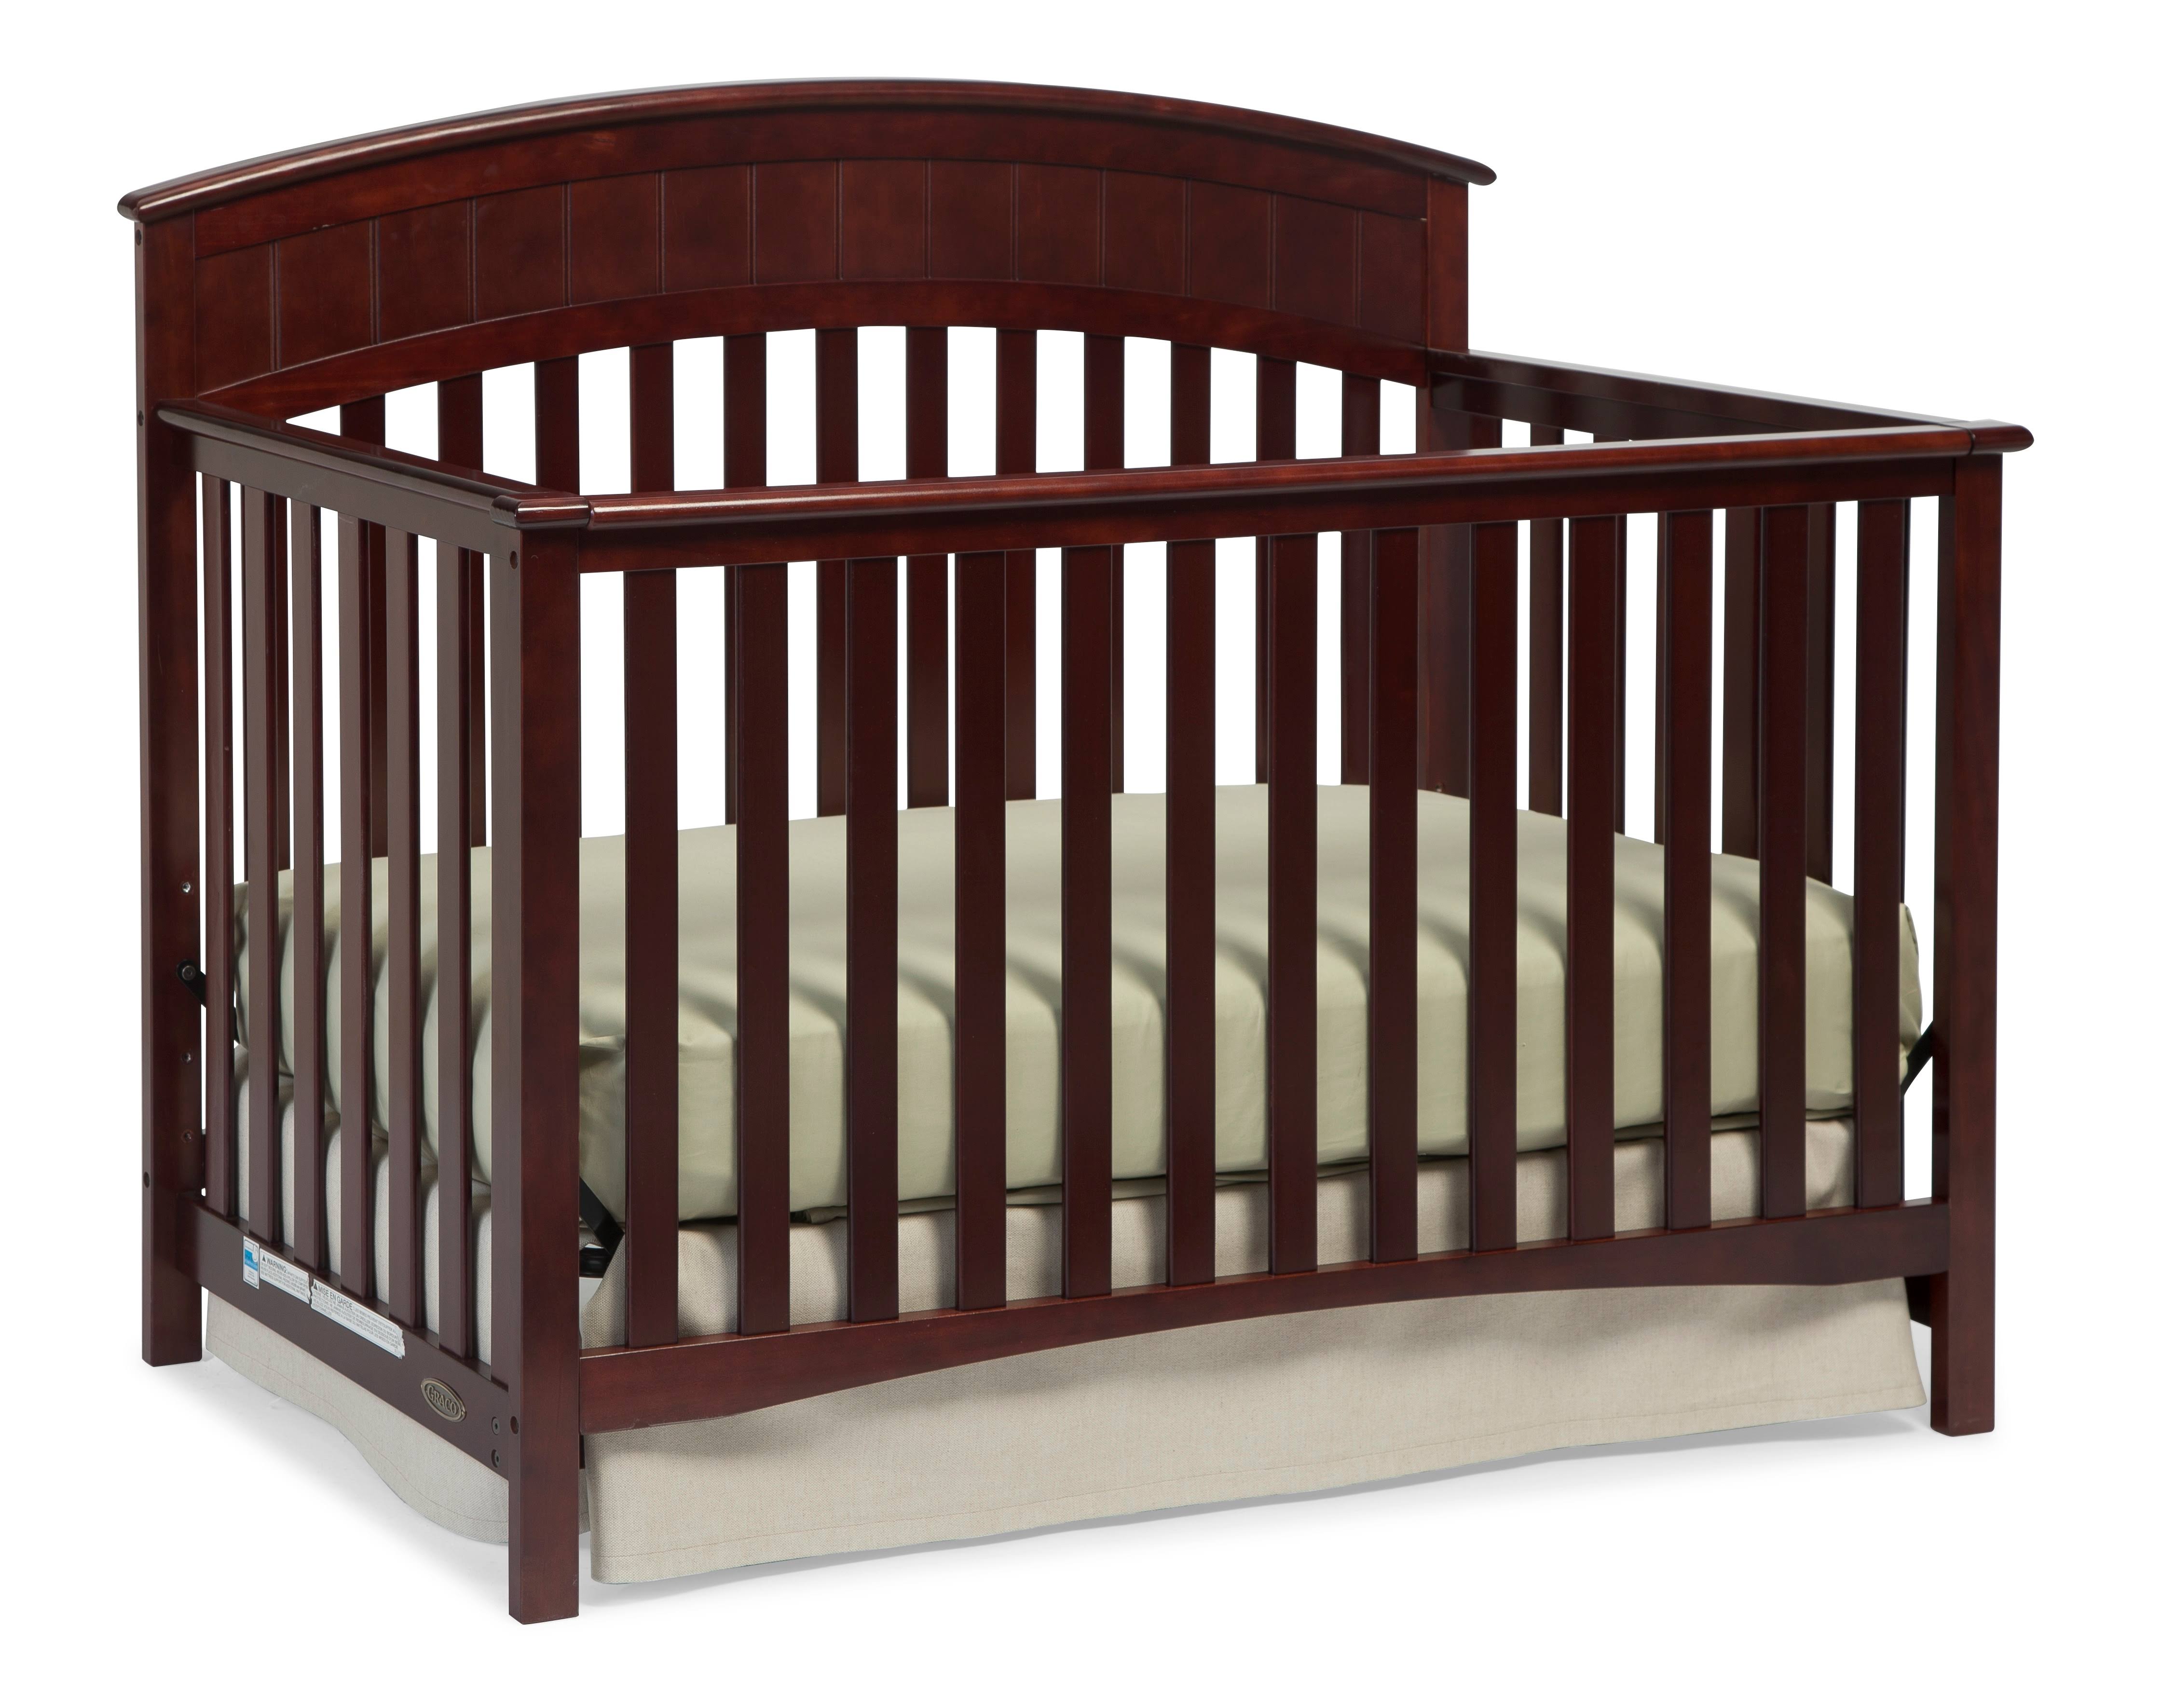 graco charleston crib mattress size